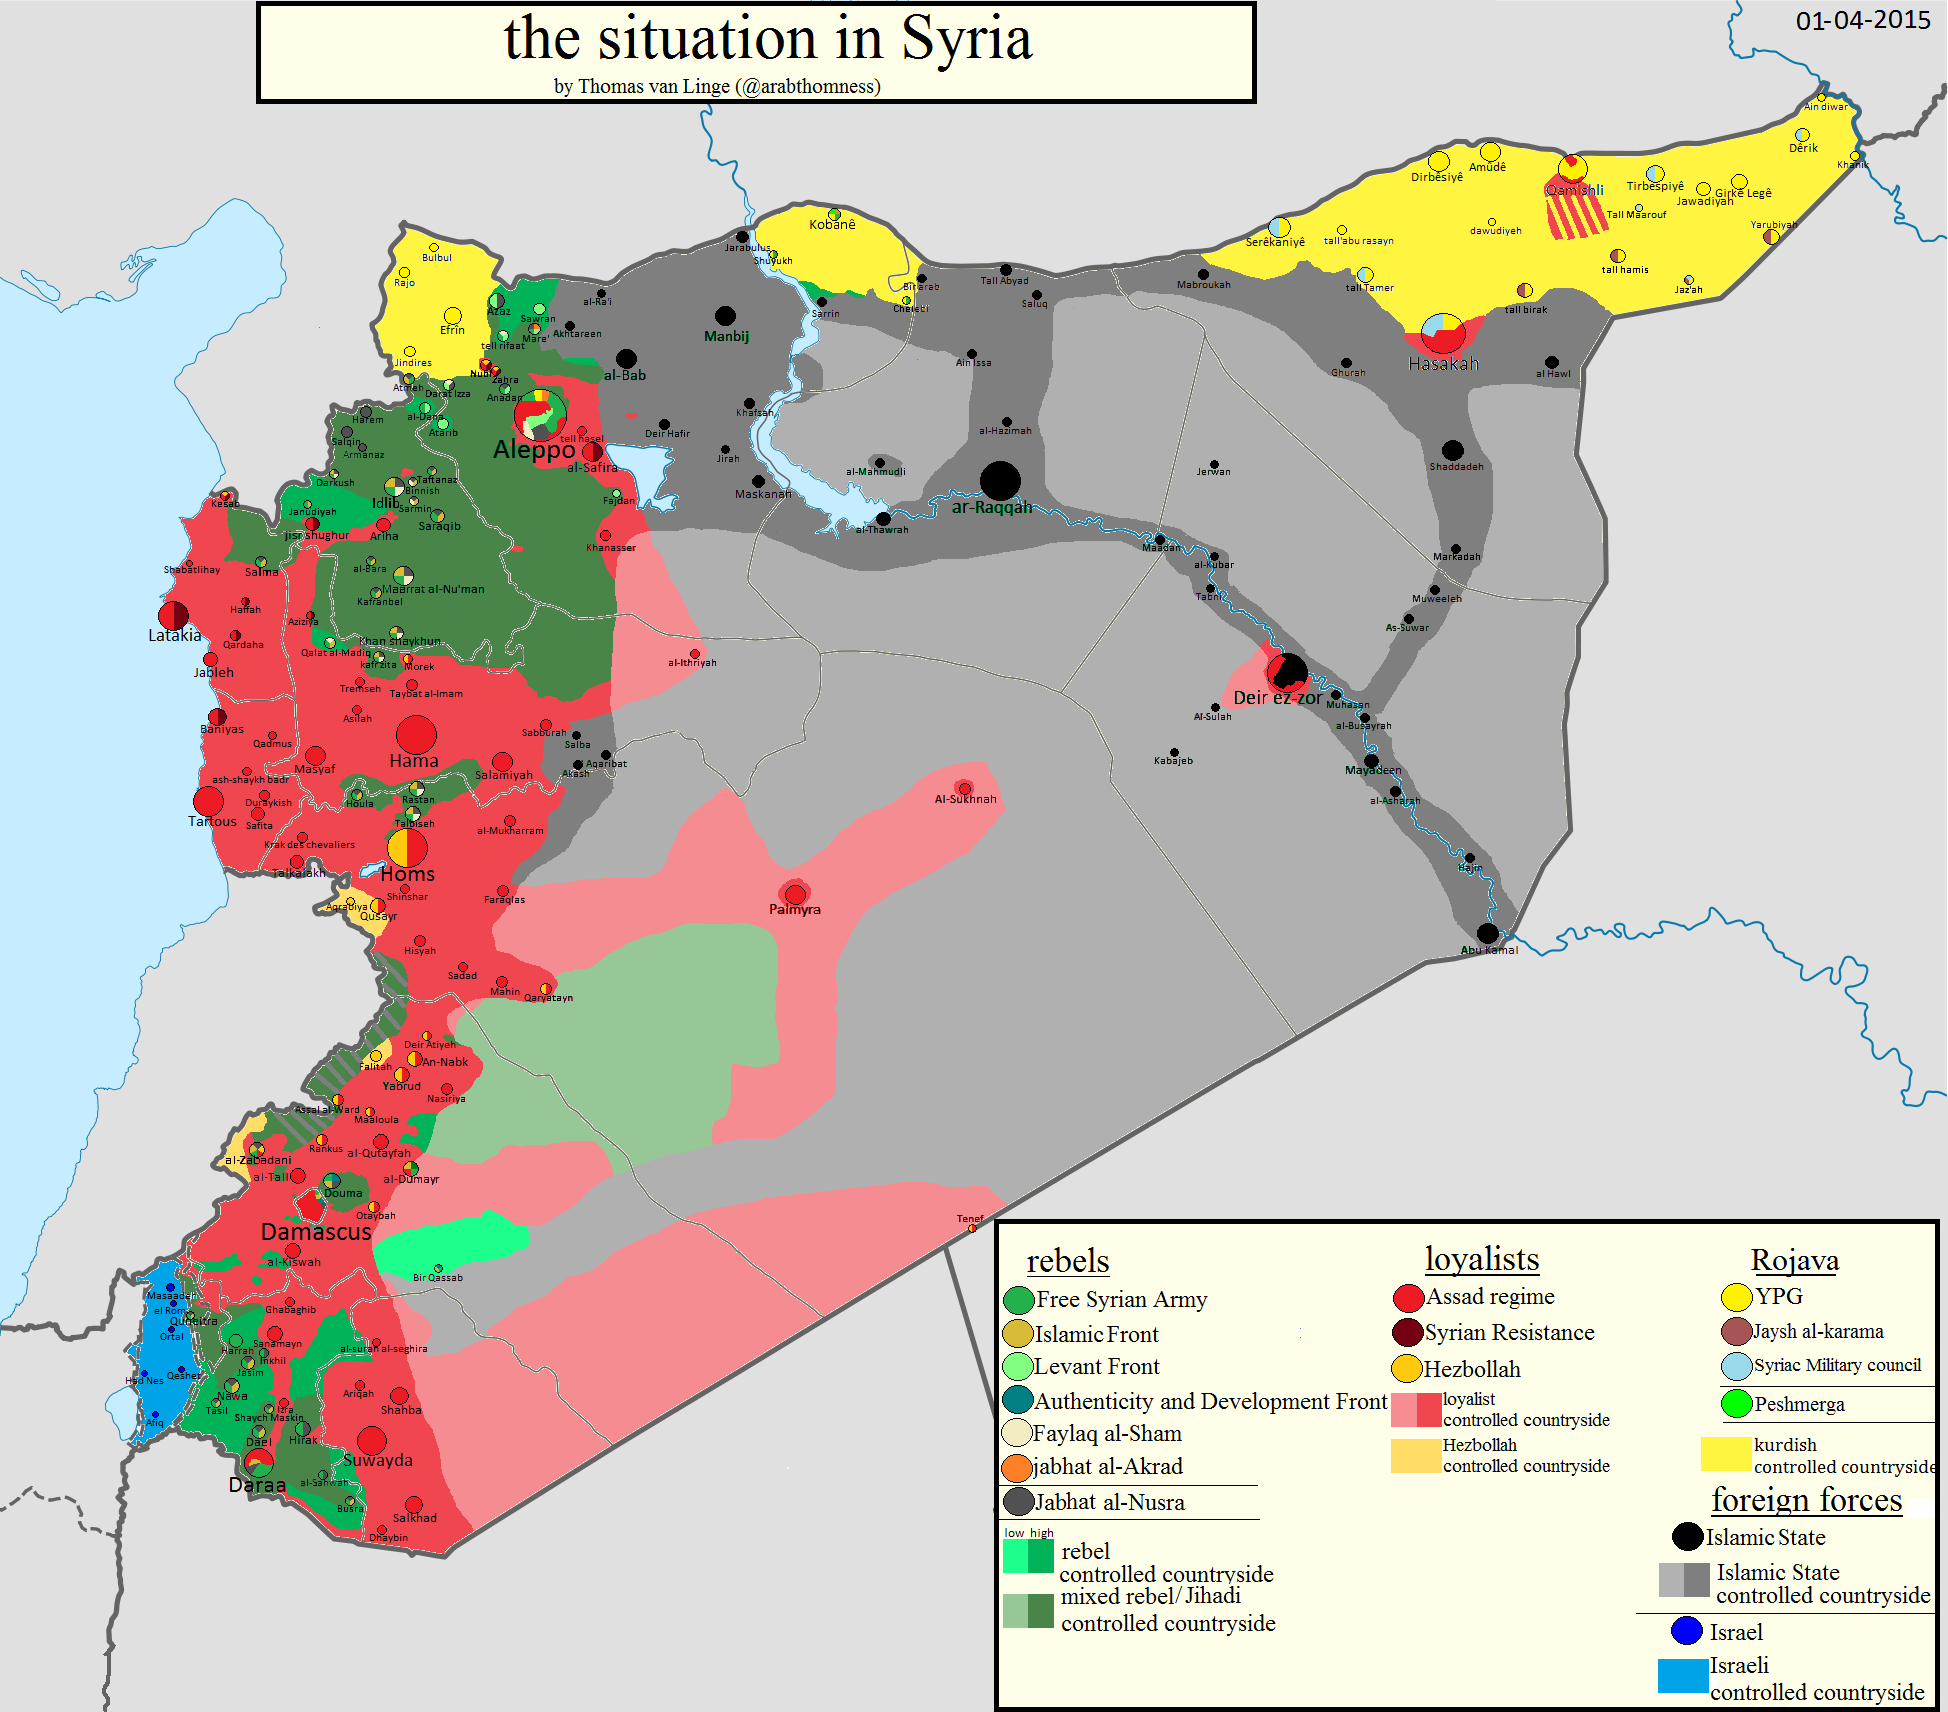 http://www.les-crises.fr/wp-content/uploads/2015/10/32-syrie-04-2015.png